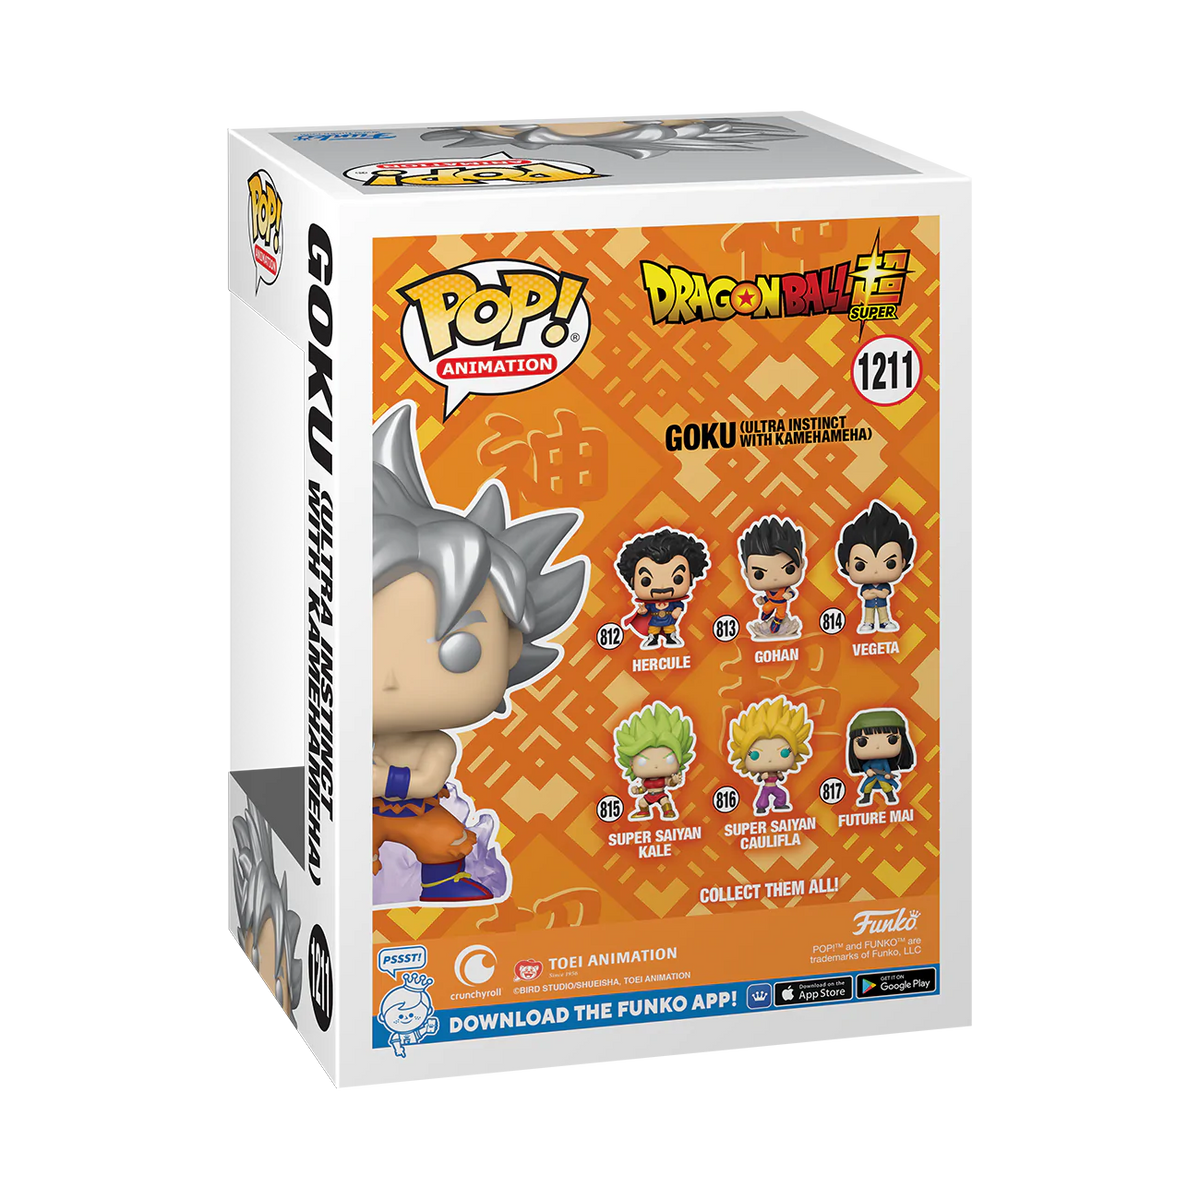 Funko Pop! Animation: Dragon Ball Super - Goku Ultra Instinct Kamehameha  Exclusi